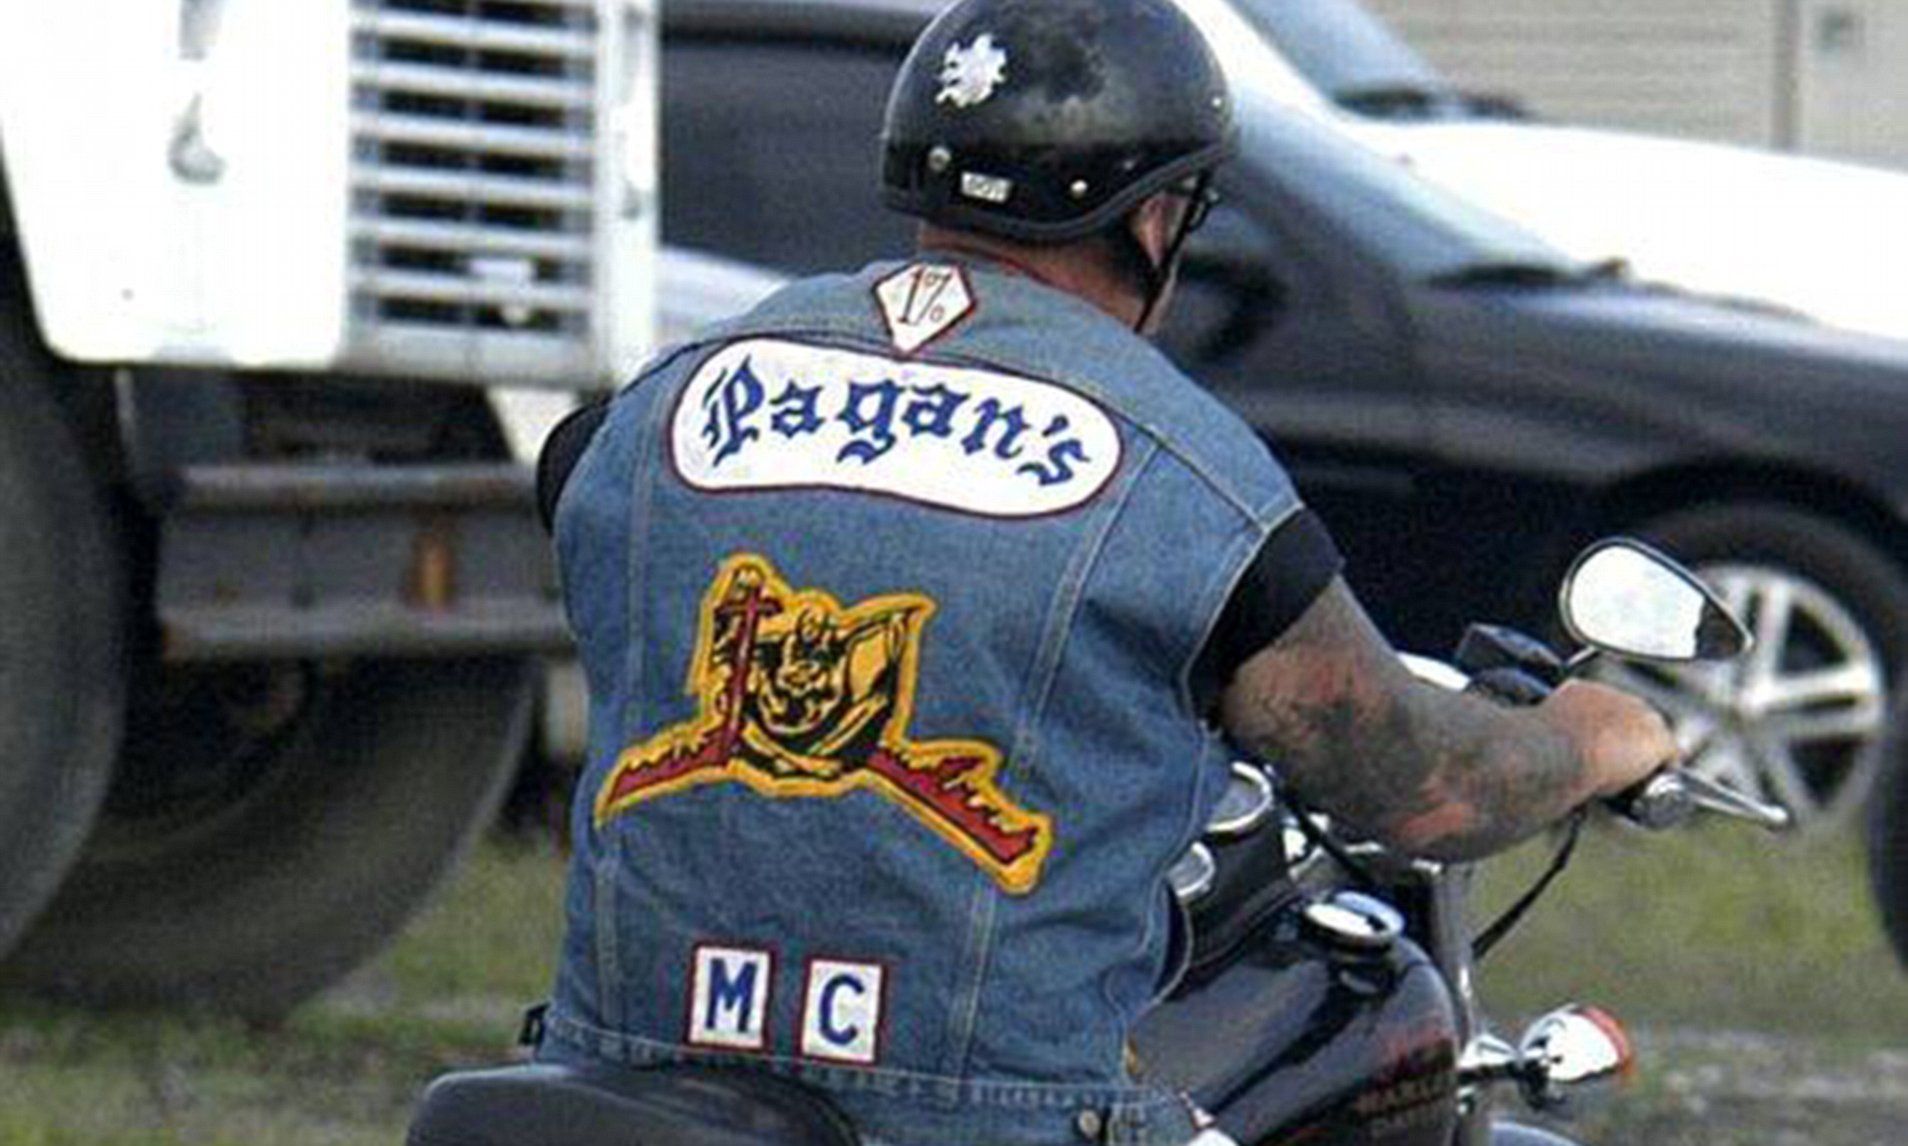 Pagans biker gang